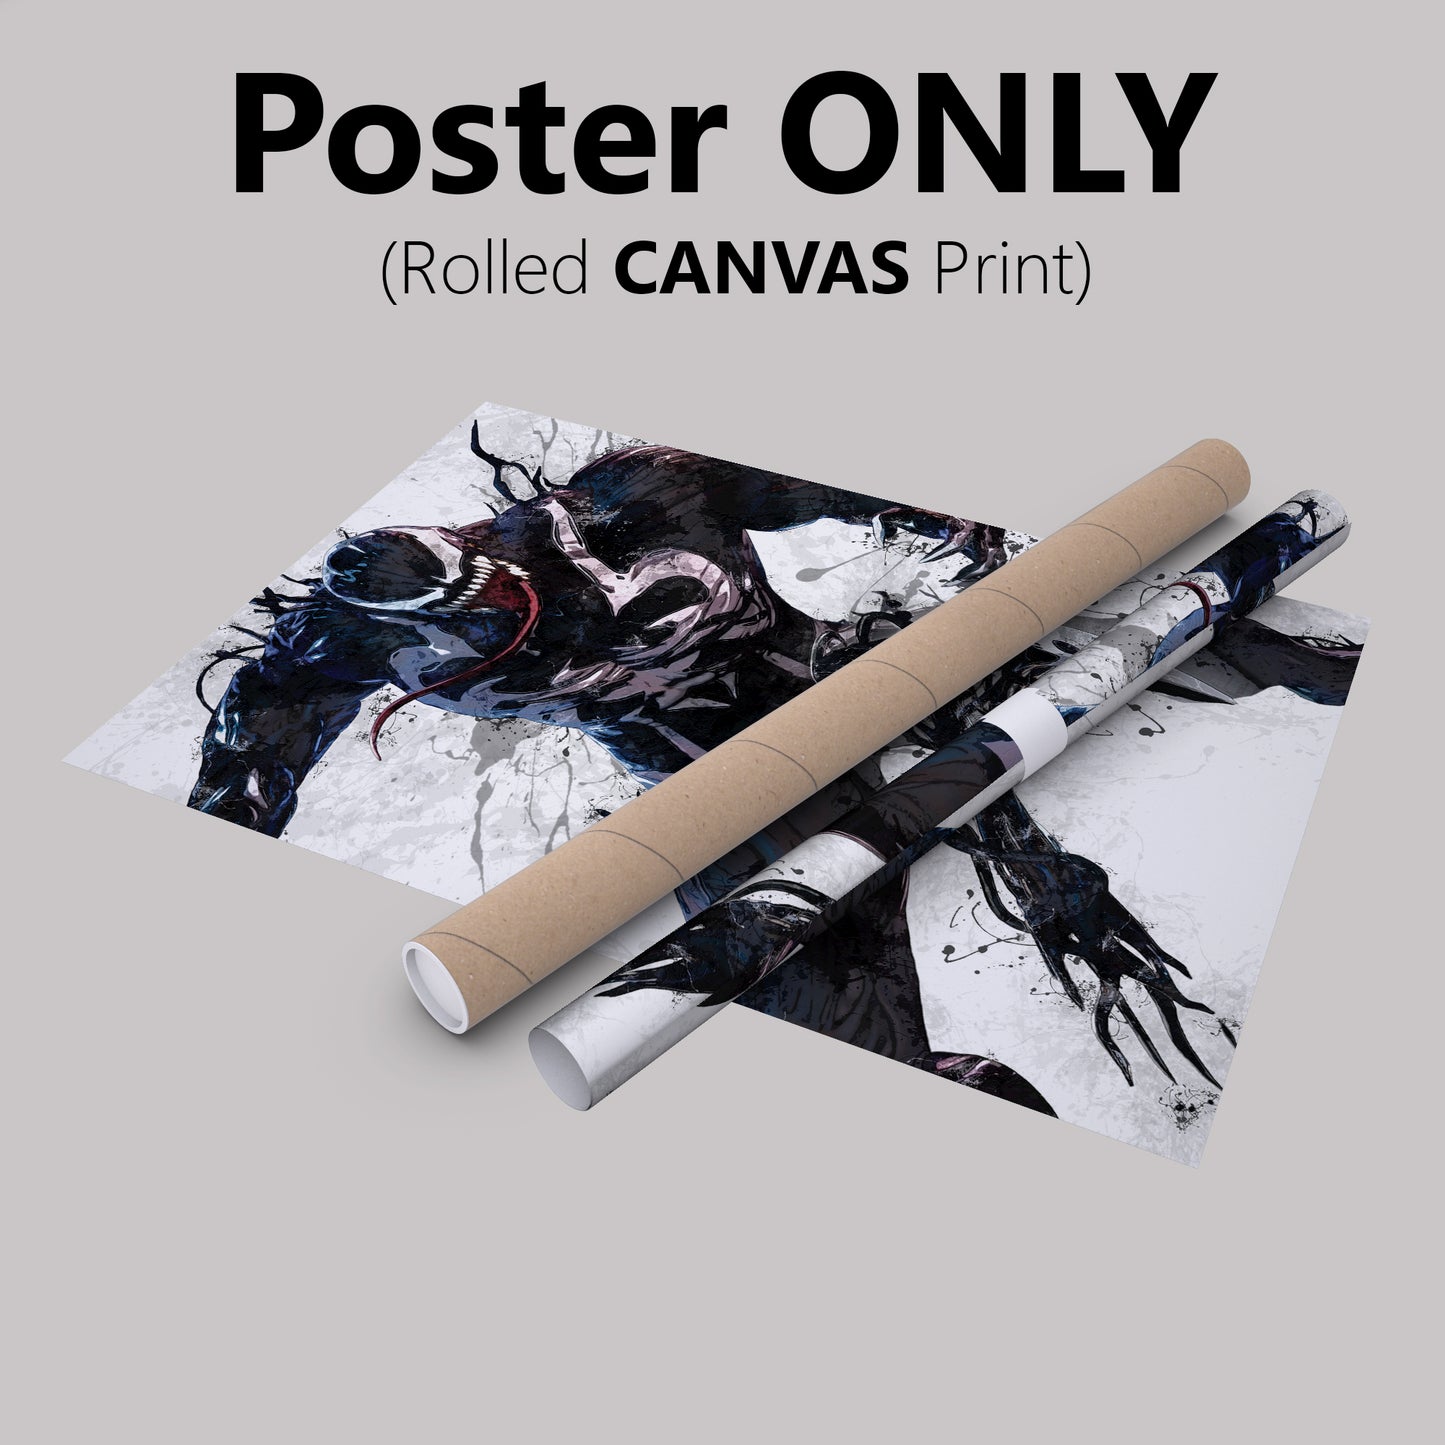 Venom Poster Marvel Superhero Comics Painting Hand Made Posters Canvas Print Kids Wall Art Man Cave Gift Home Decor